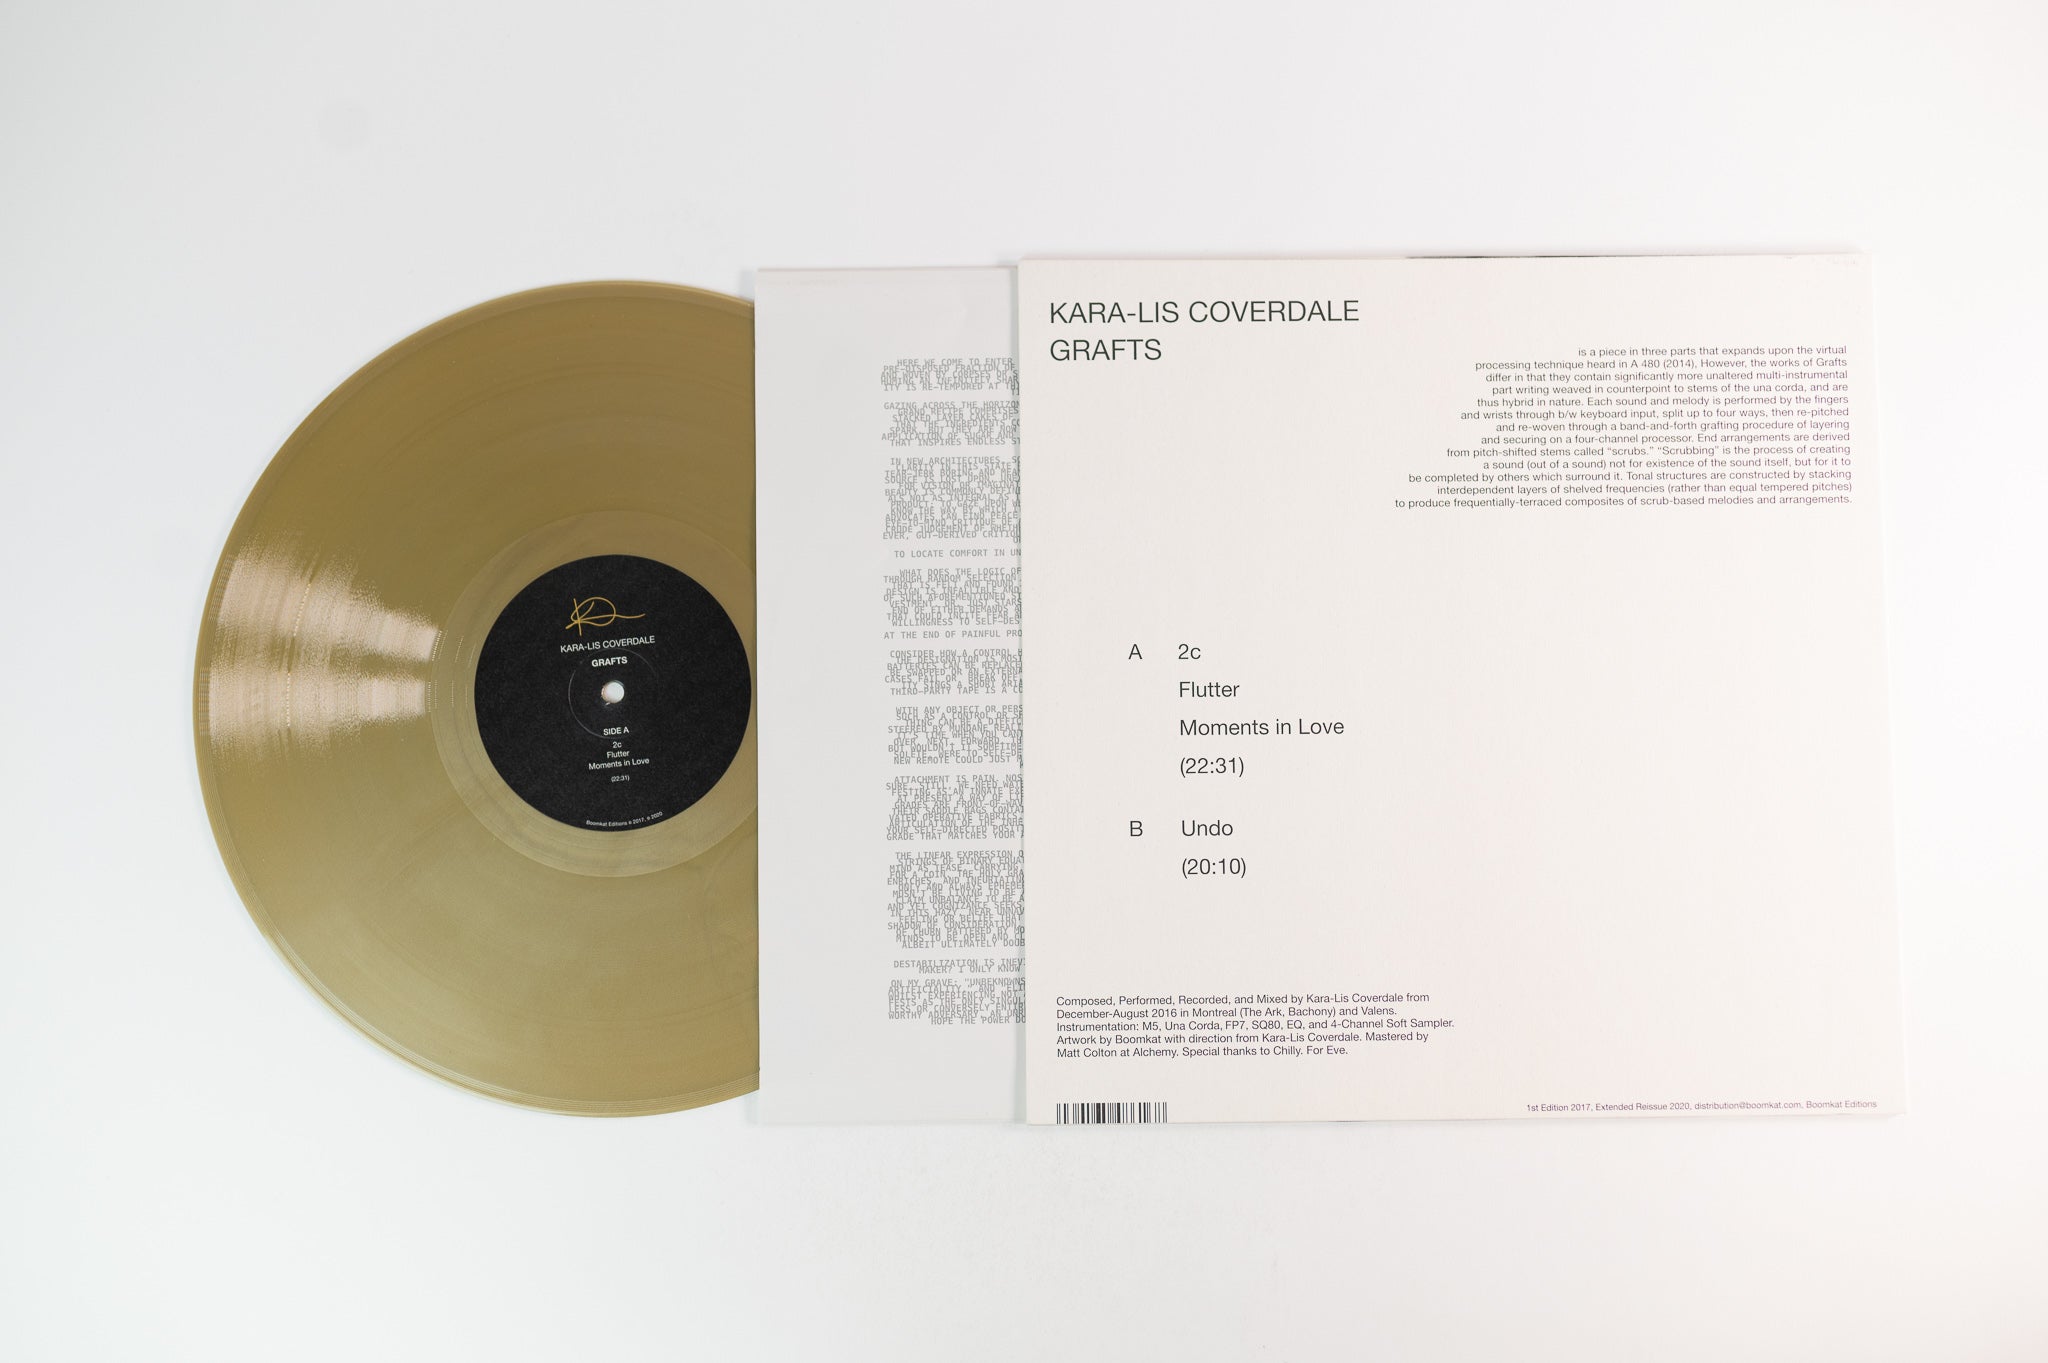 Kara-Lis Coverdale - Grafts on BoomKats Extended Edition Gold Vinyl Reissue